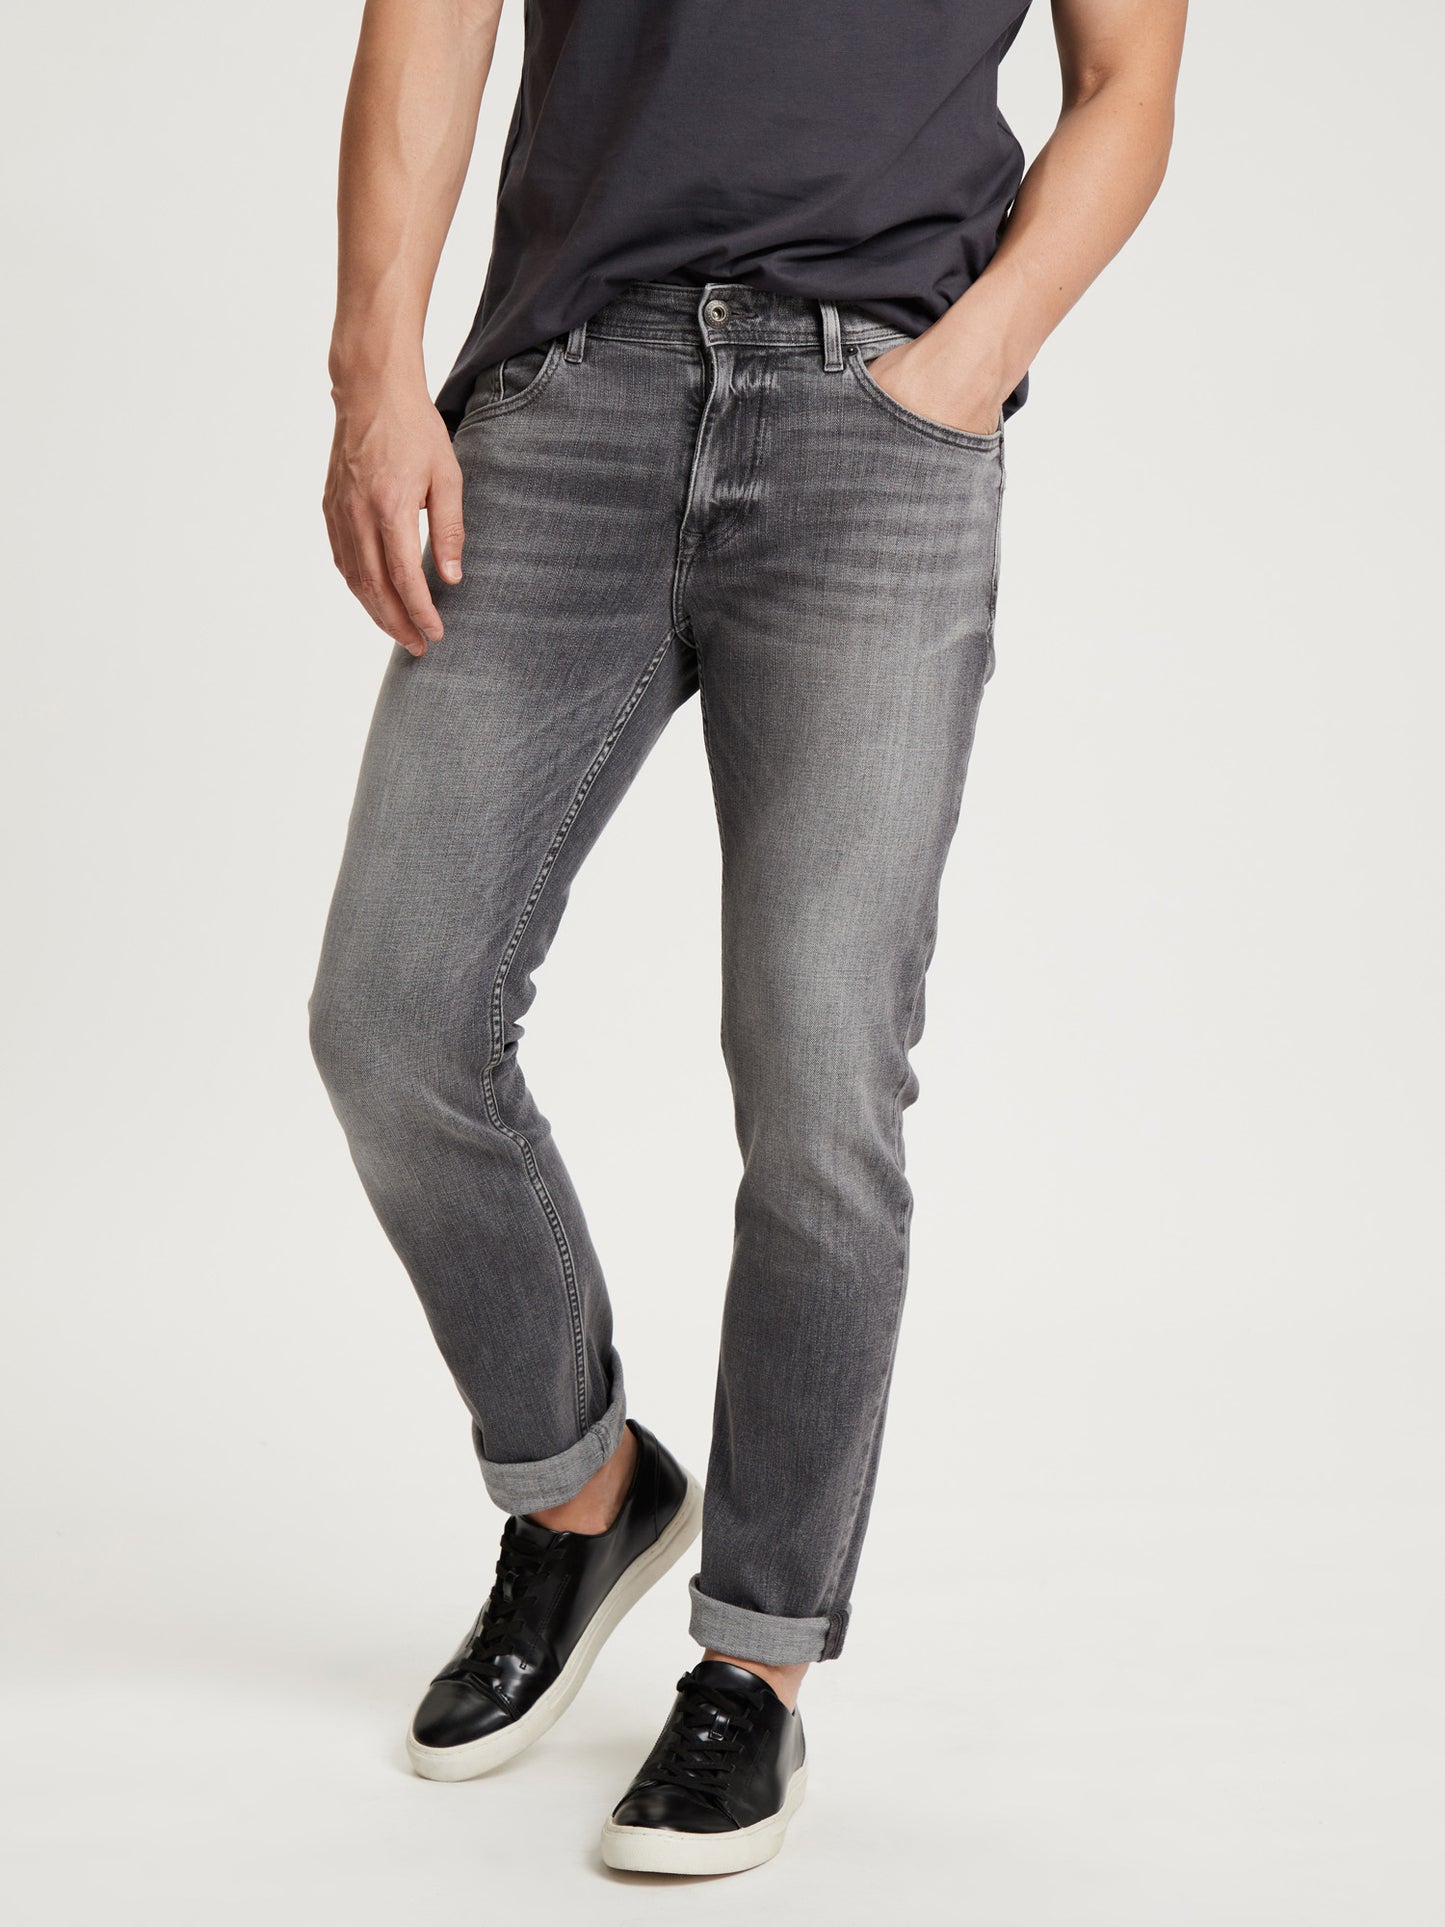 Dylan Herren Jeans Regular Fit Regular Waist Straight Leg hellgrau